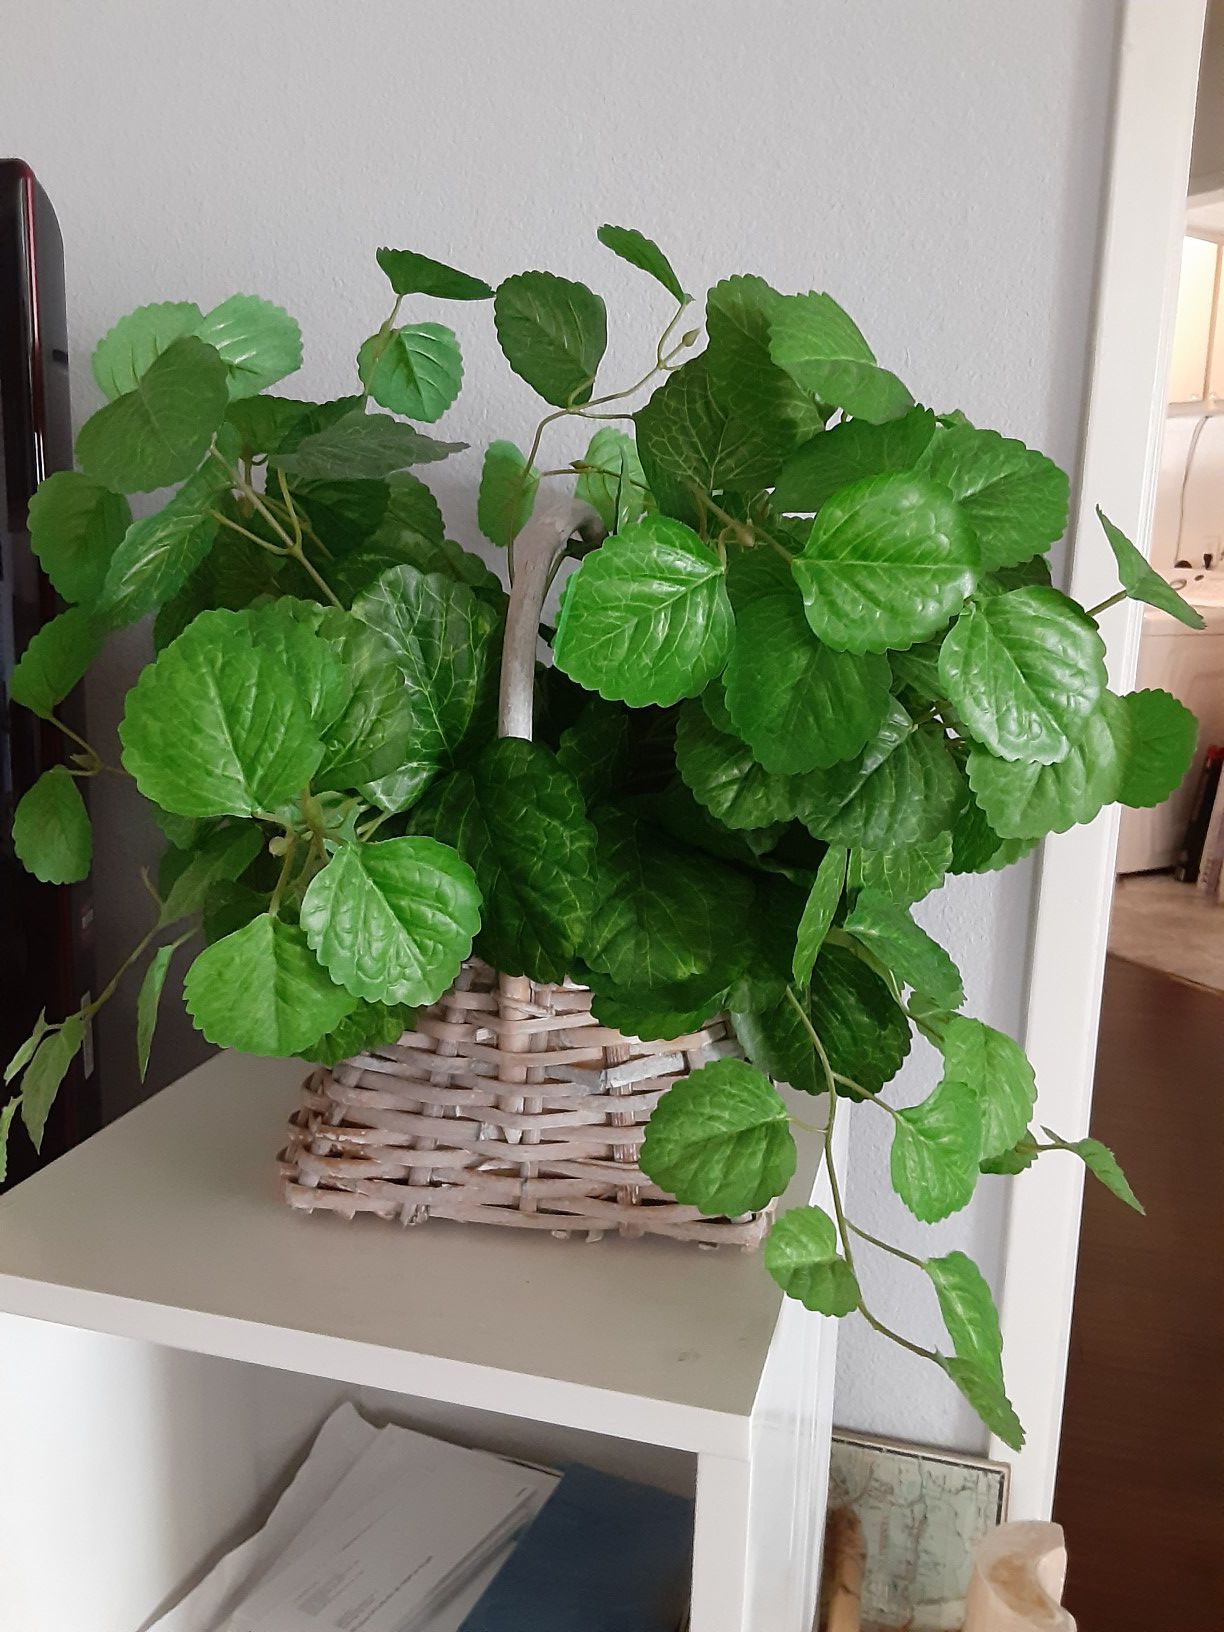 Fake plant in basket